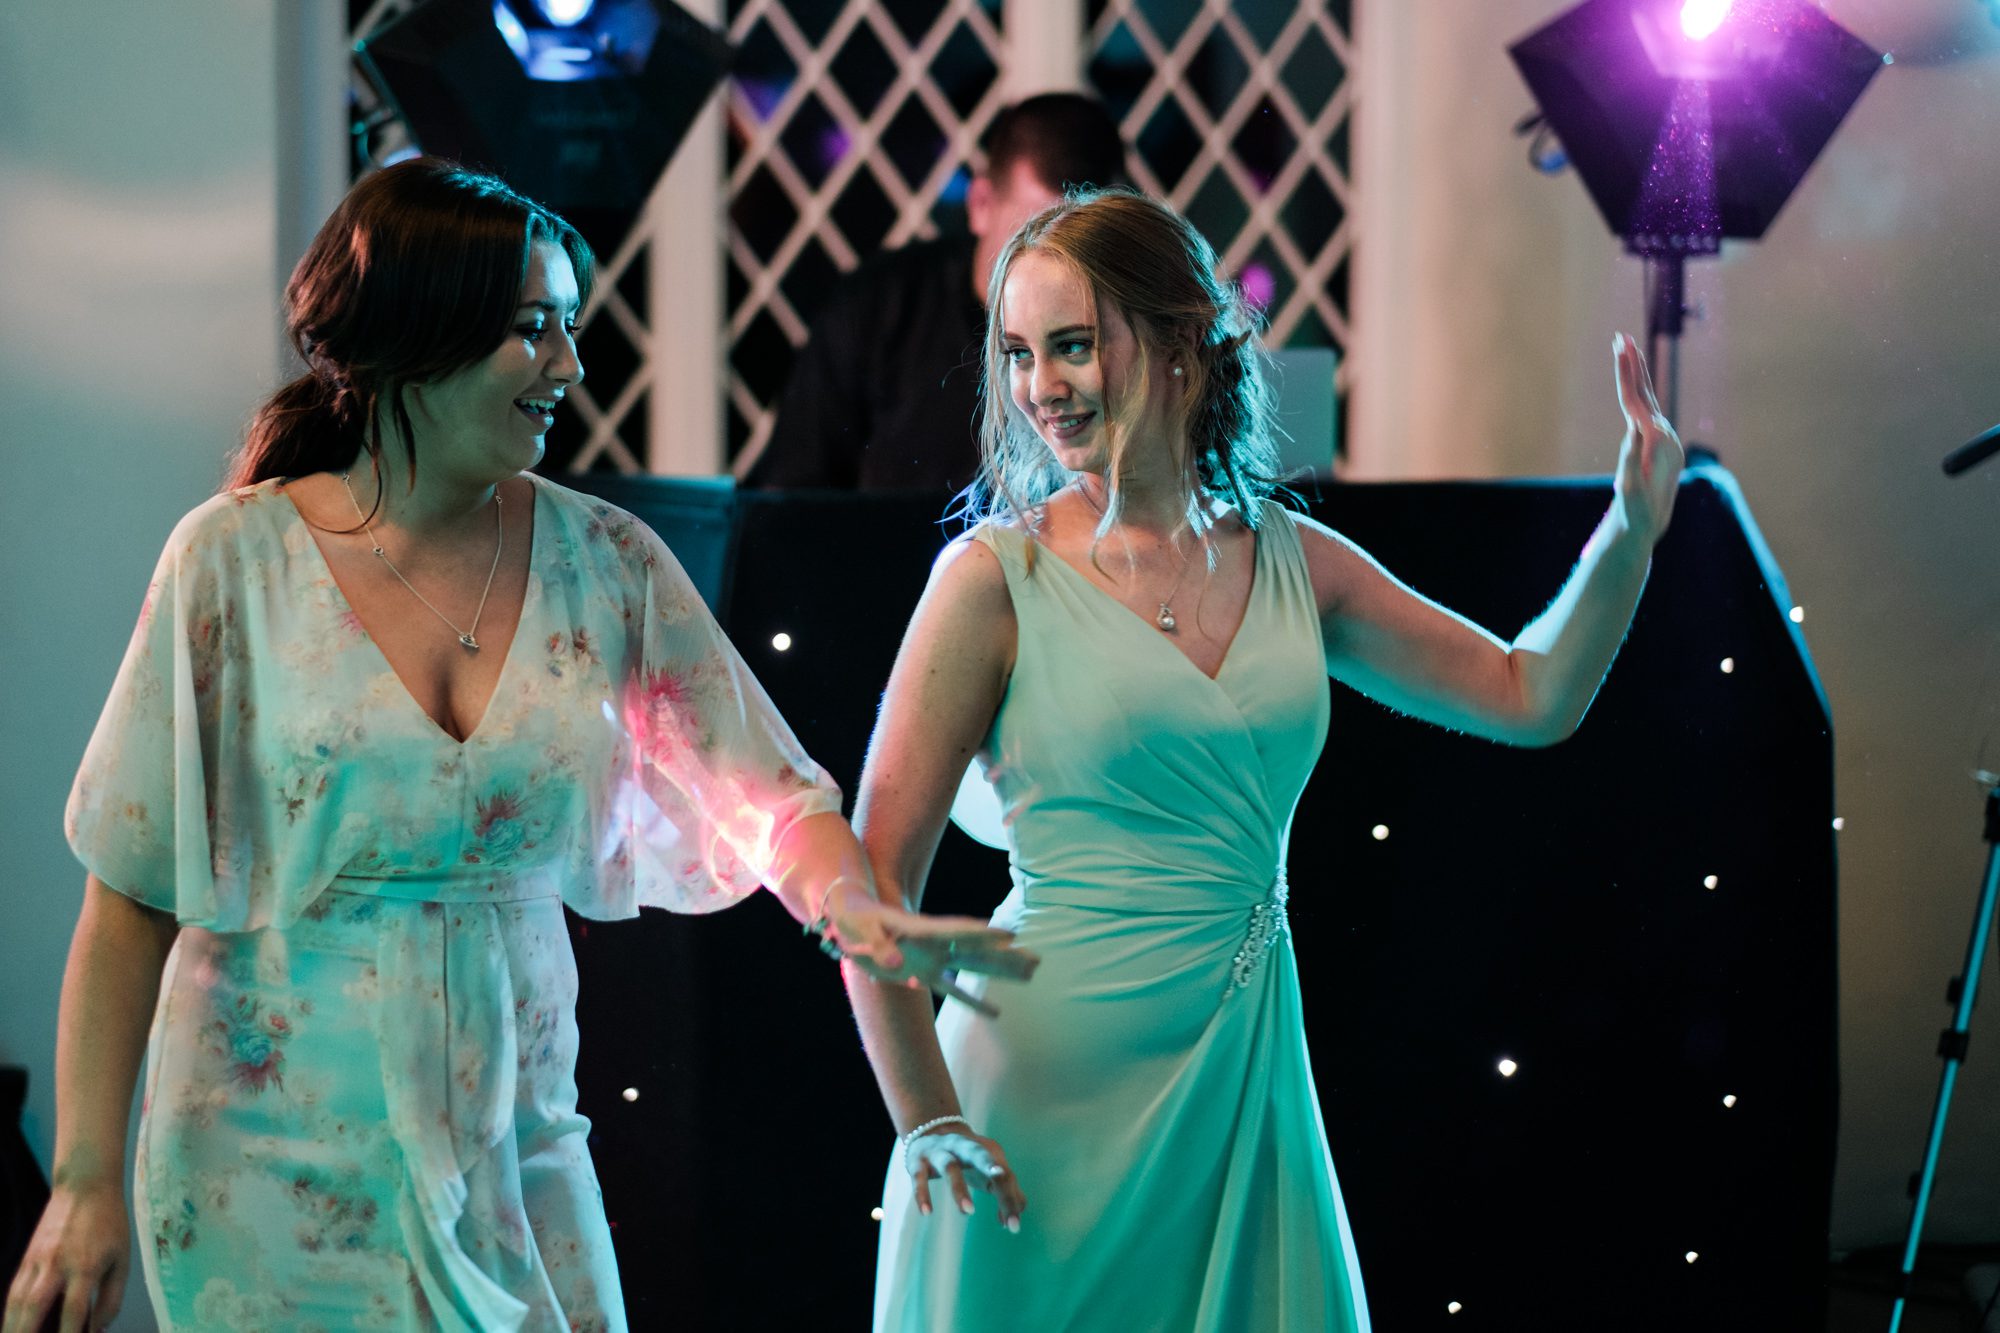 bridesmaid and friend dancing at wedding reception